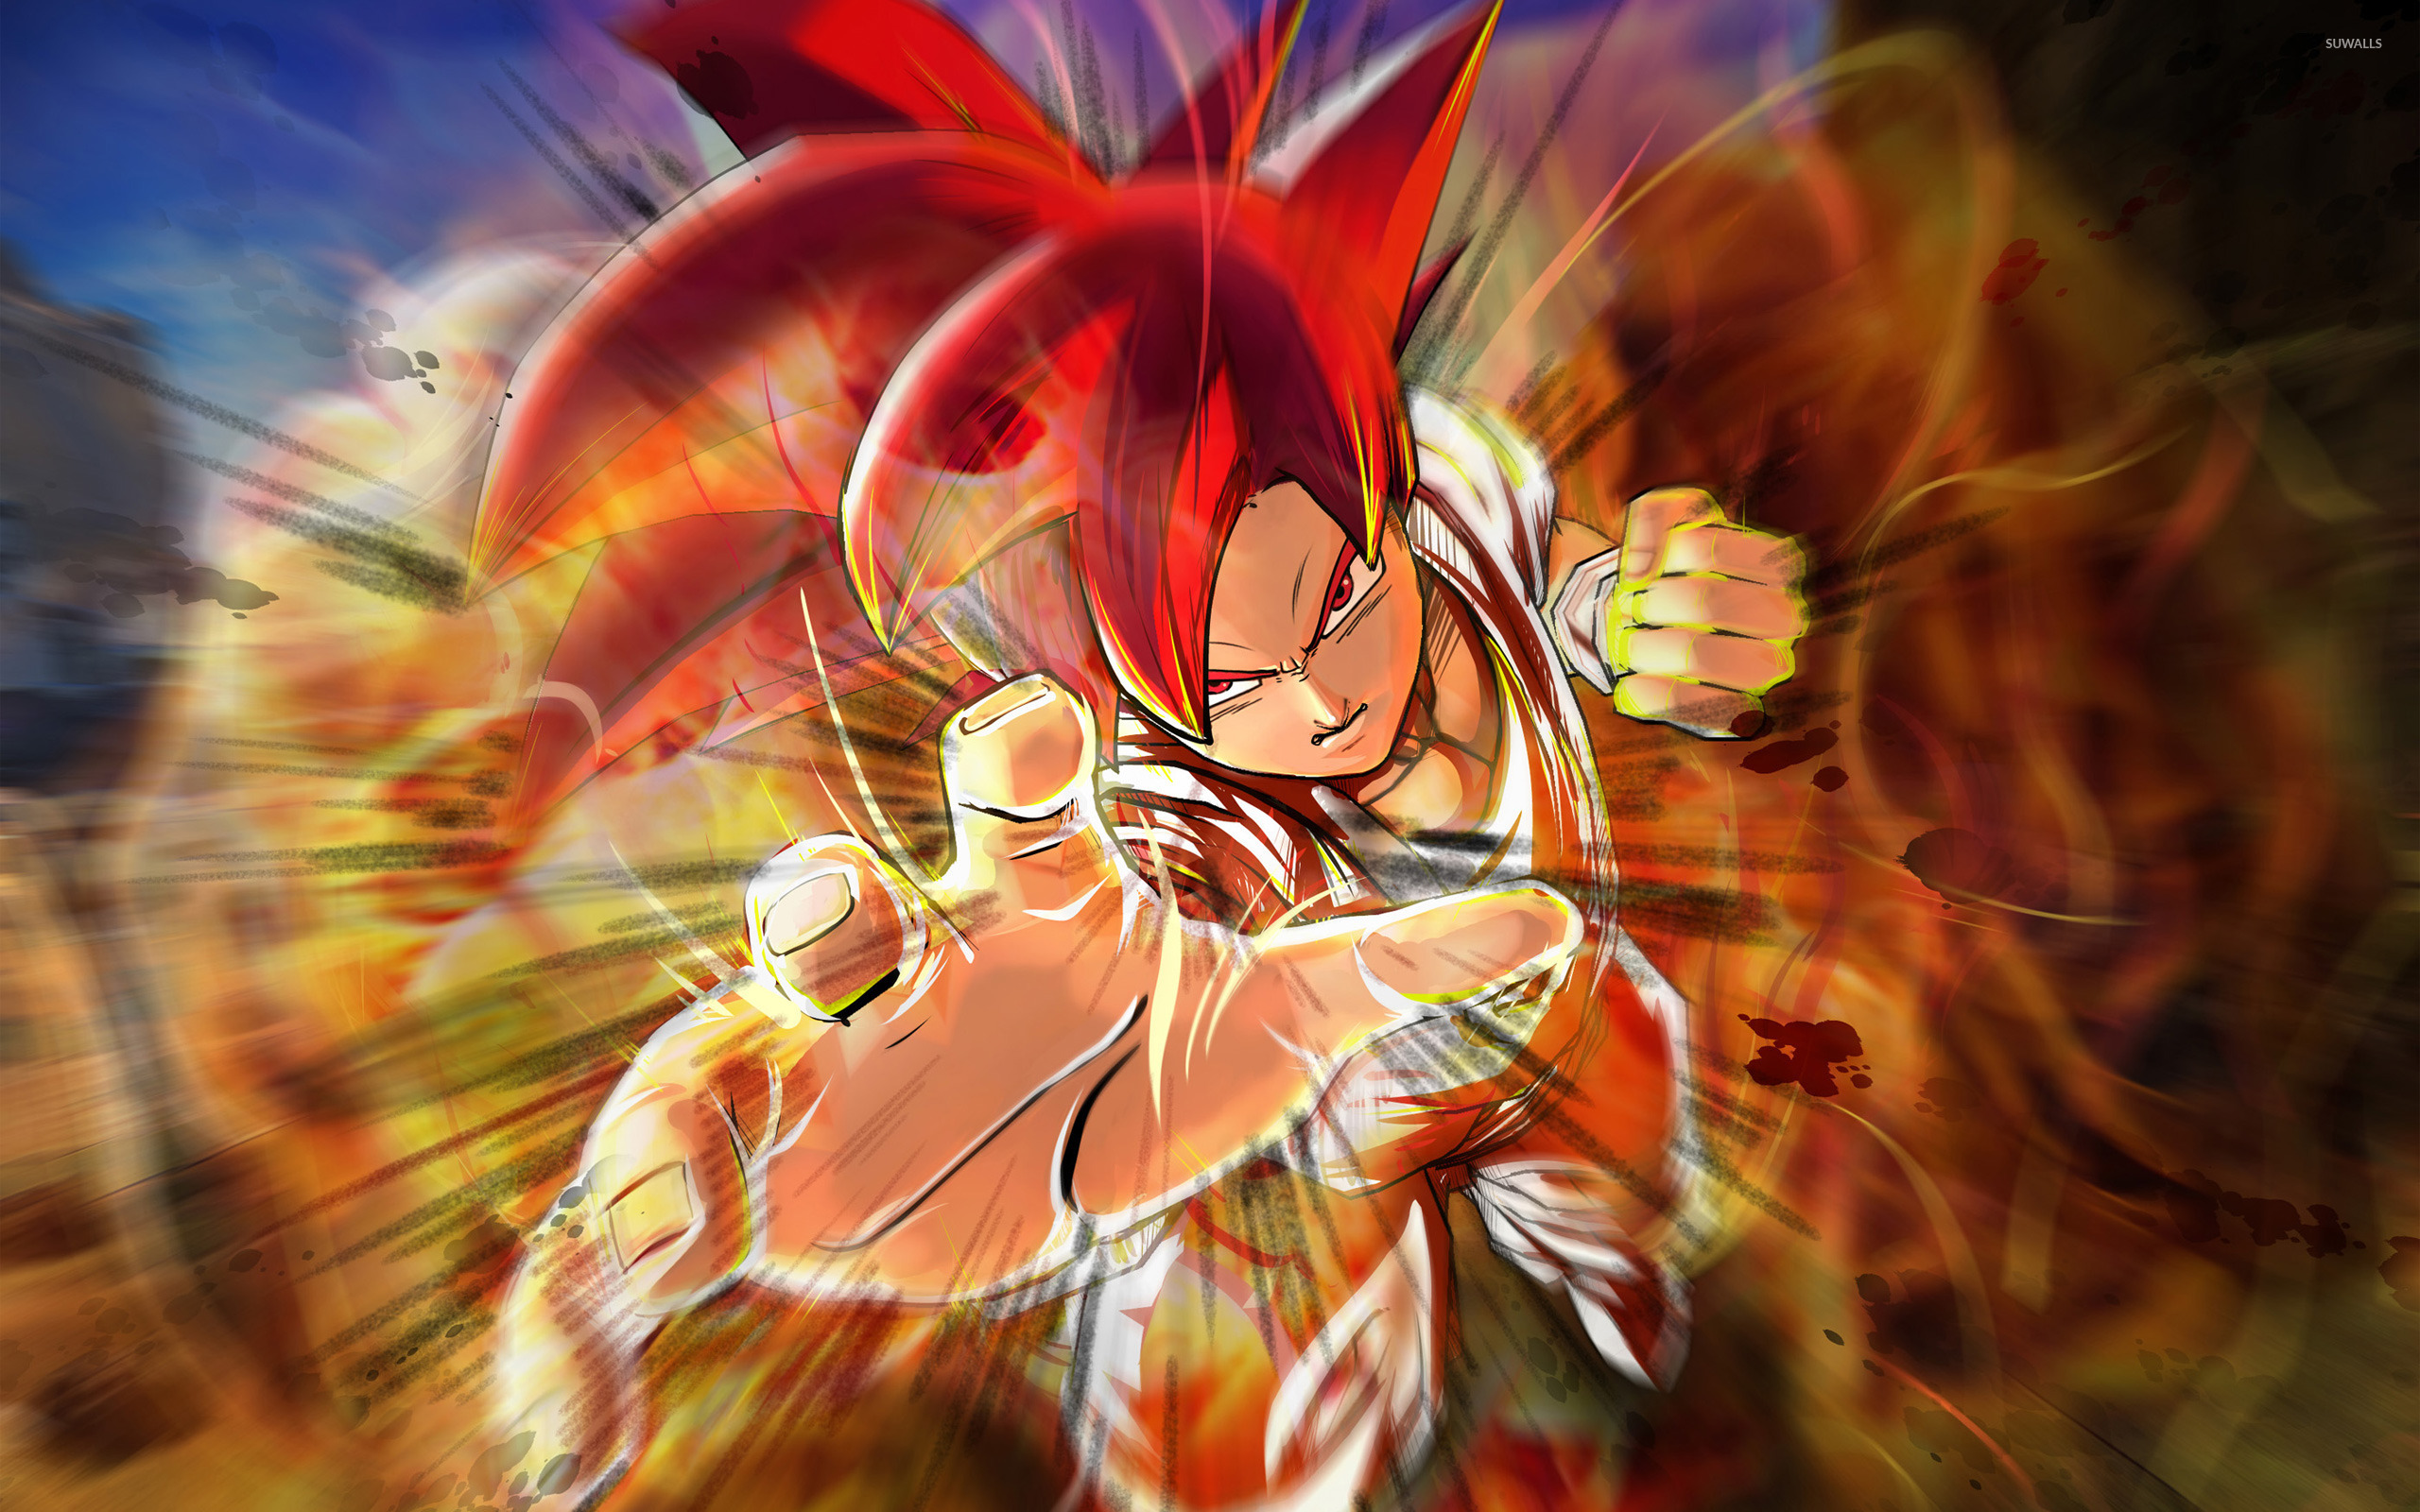 Free Download Goku Dragon Ball Z Battle Of Gods 2 Wallpaper Anime 2560x1600 For Your Desktop 